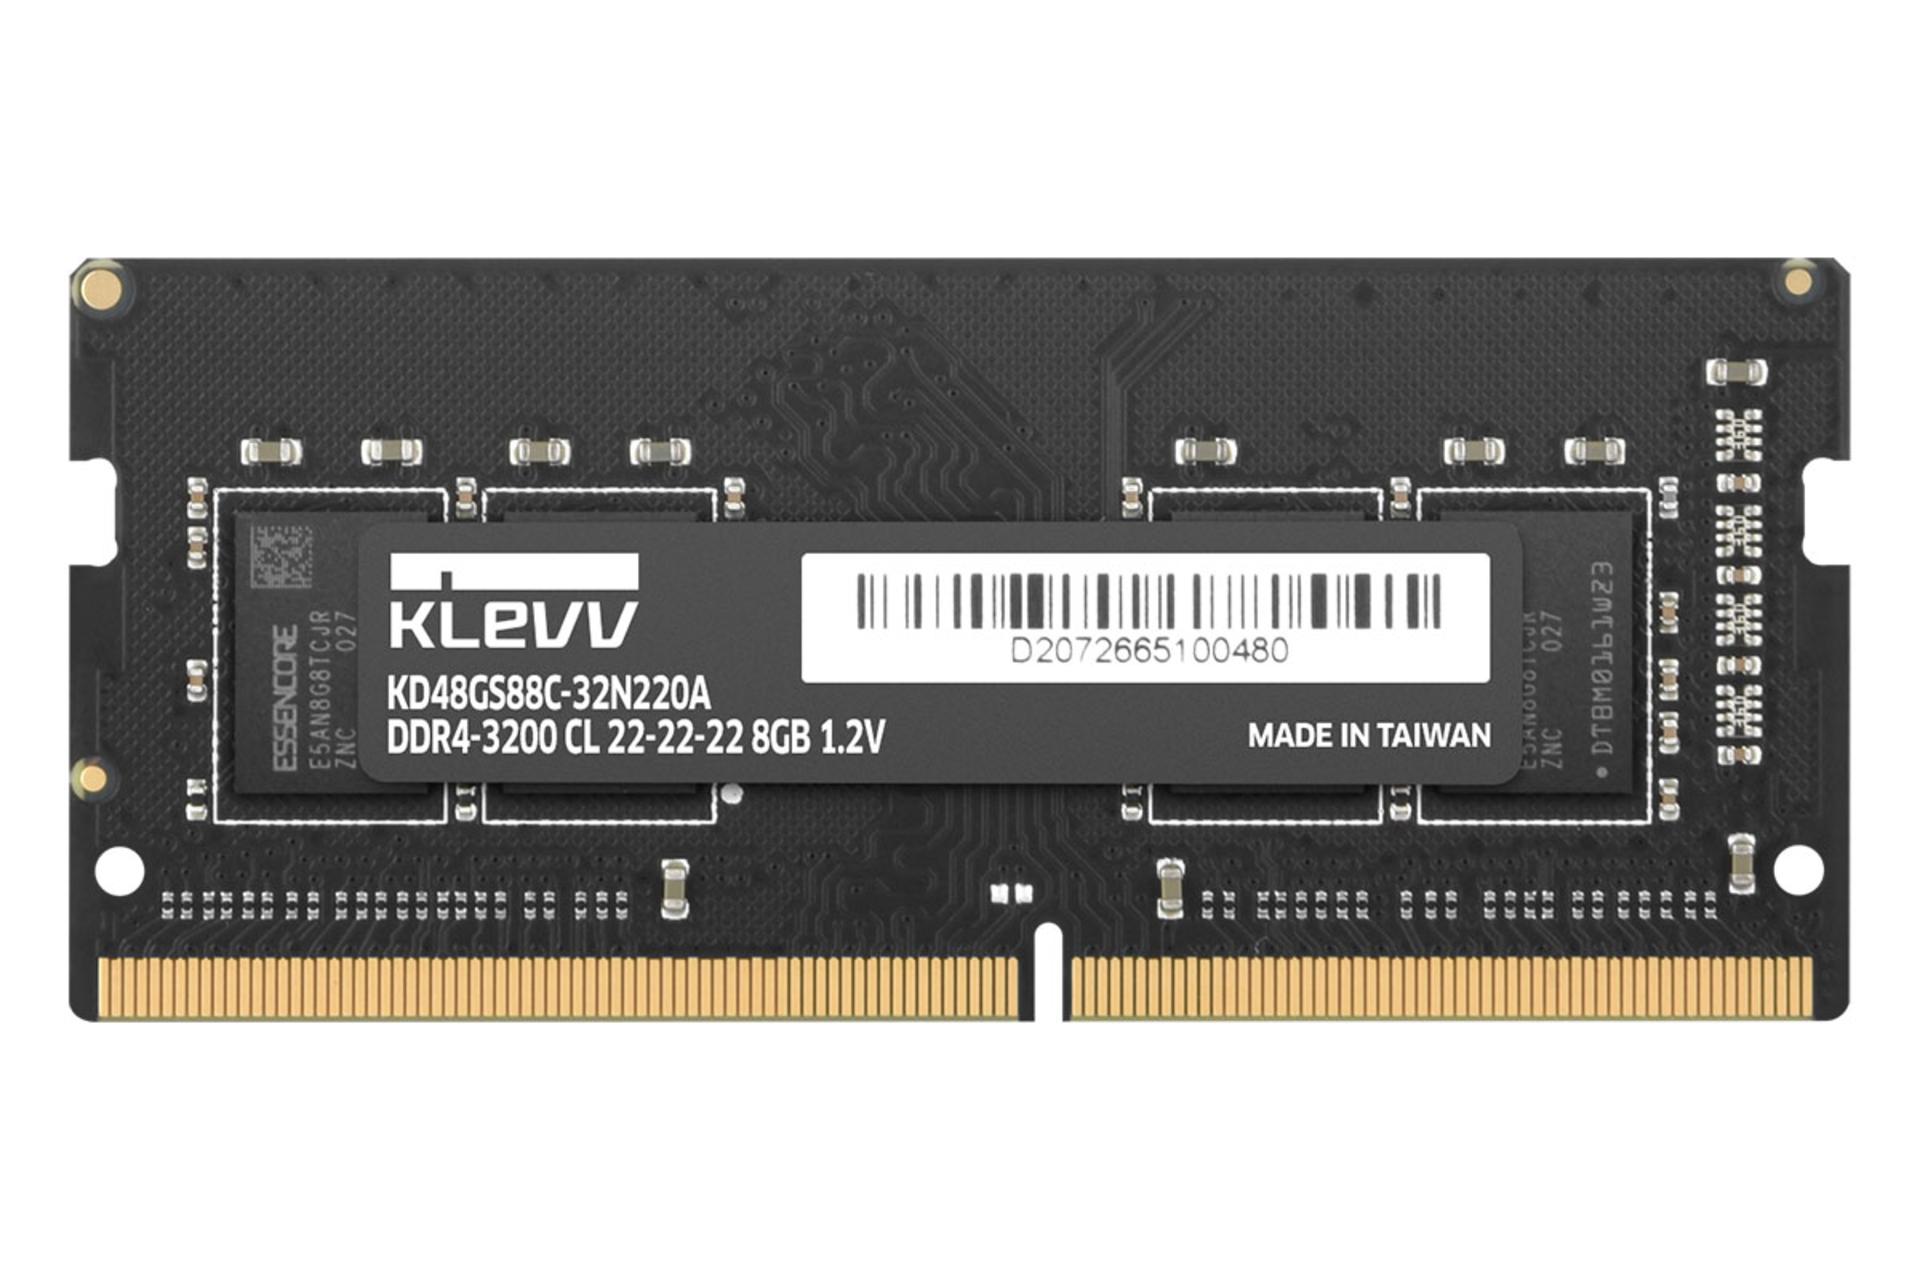  klevv SO-DIMM Standard ظرفیت 8 گیگابایت از نوع DDR4-3200 نمای روبرو